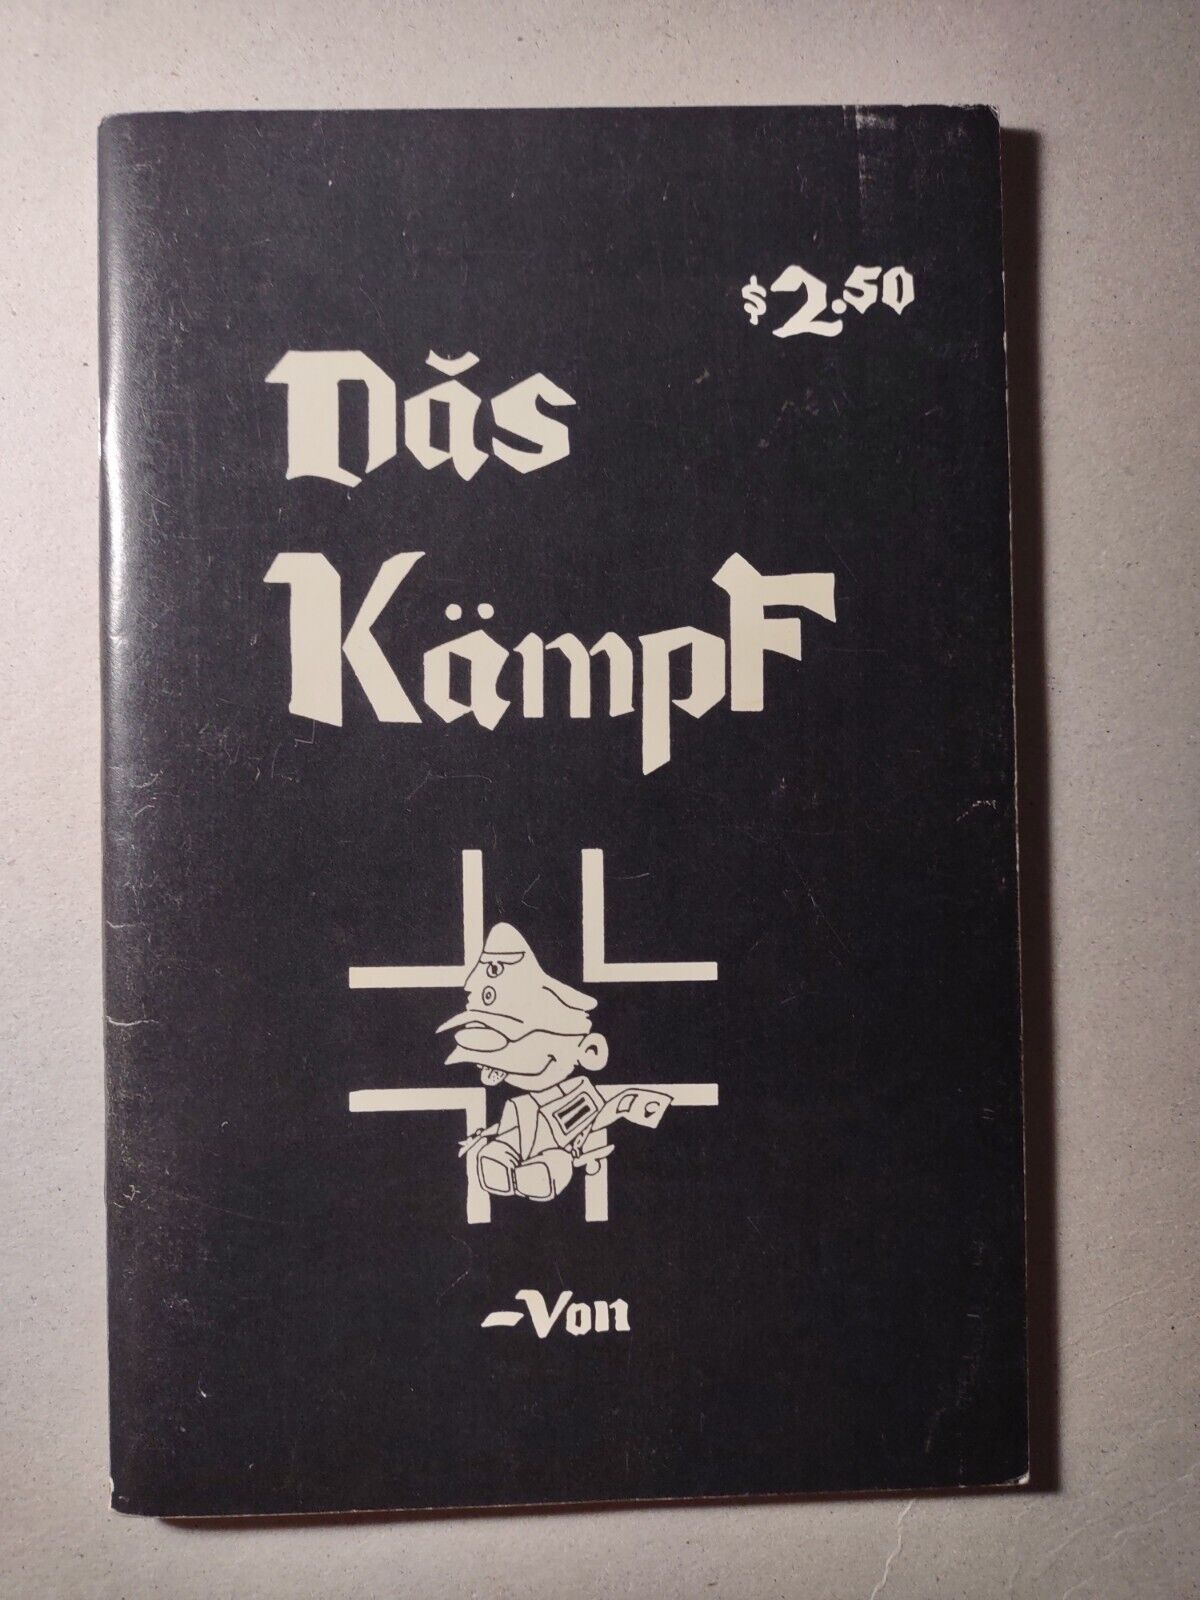 Original DAS KAMPF - 1977 Cartoon Book by Vaughn Bode, Limited Edition of 3,000